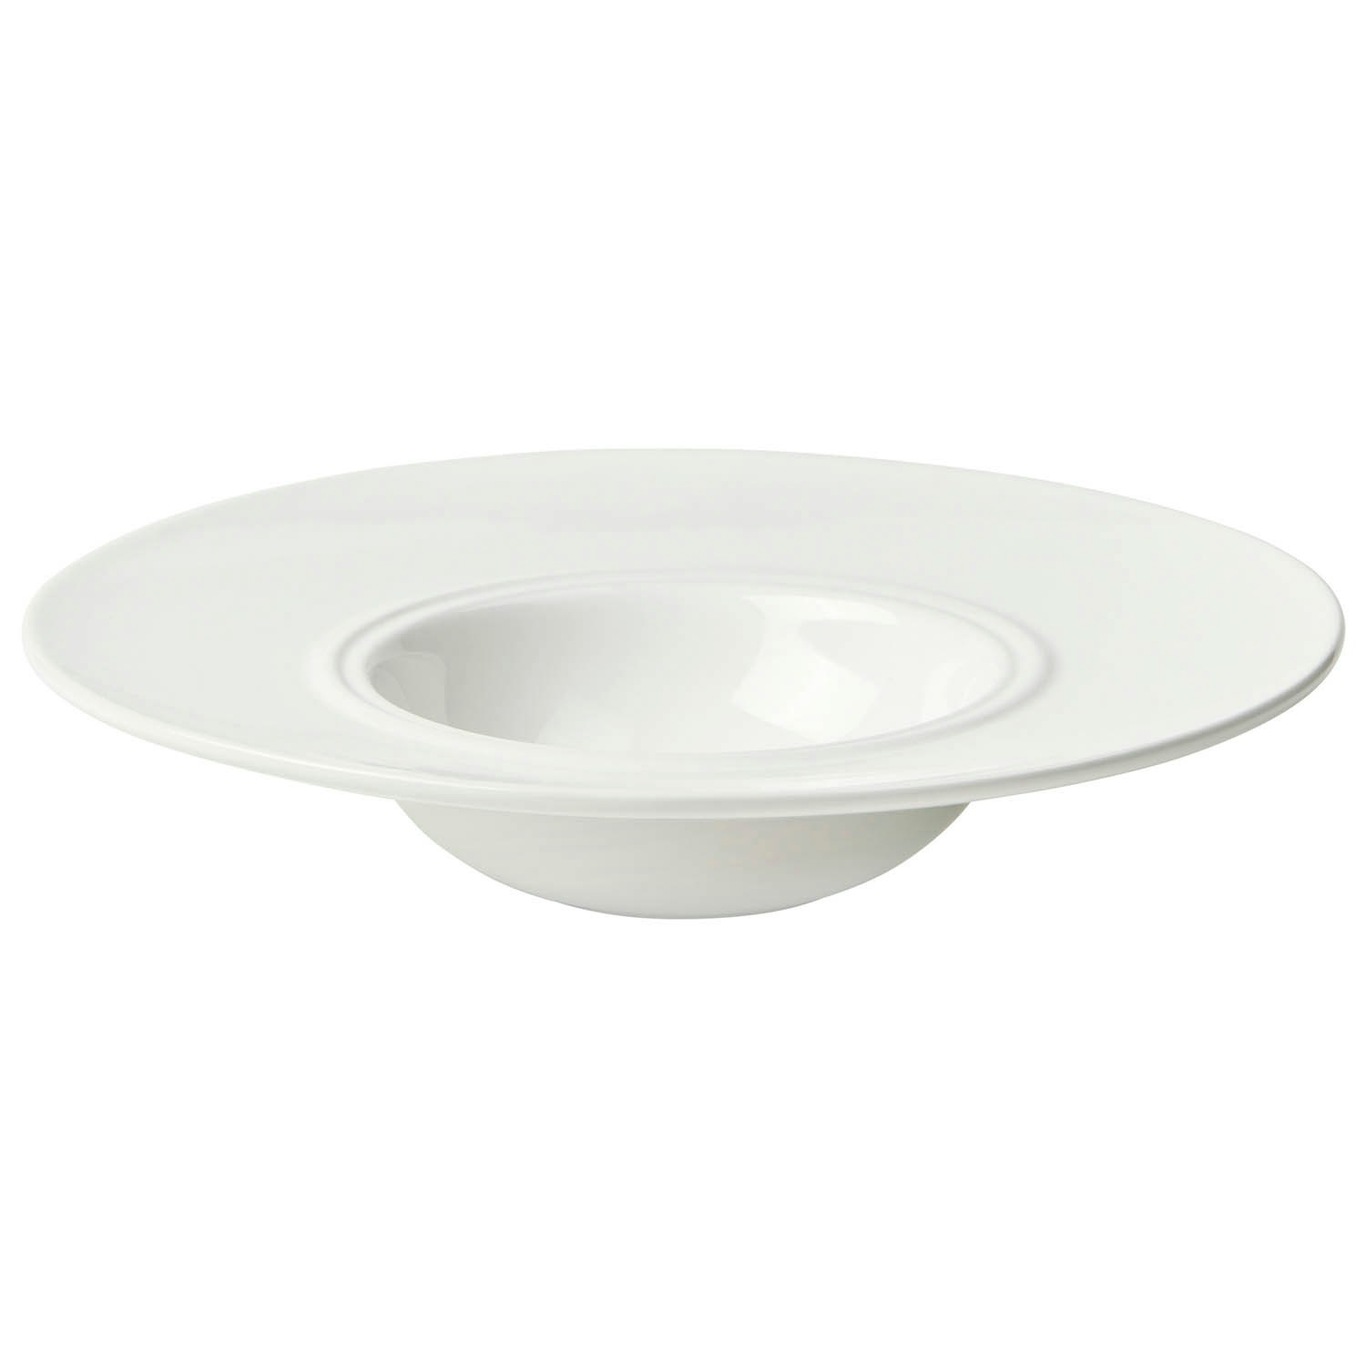 Stevns Pasta Plate Chalk White, 26 cm